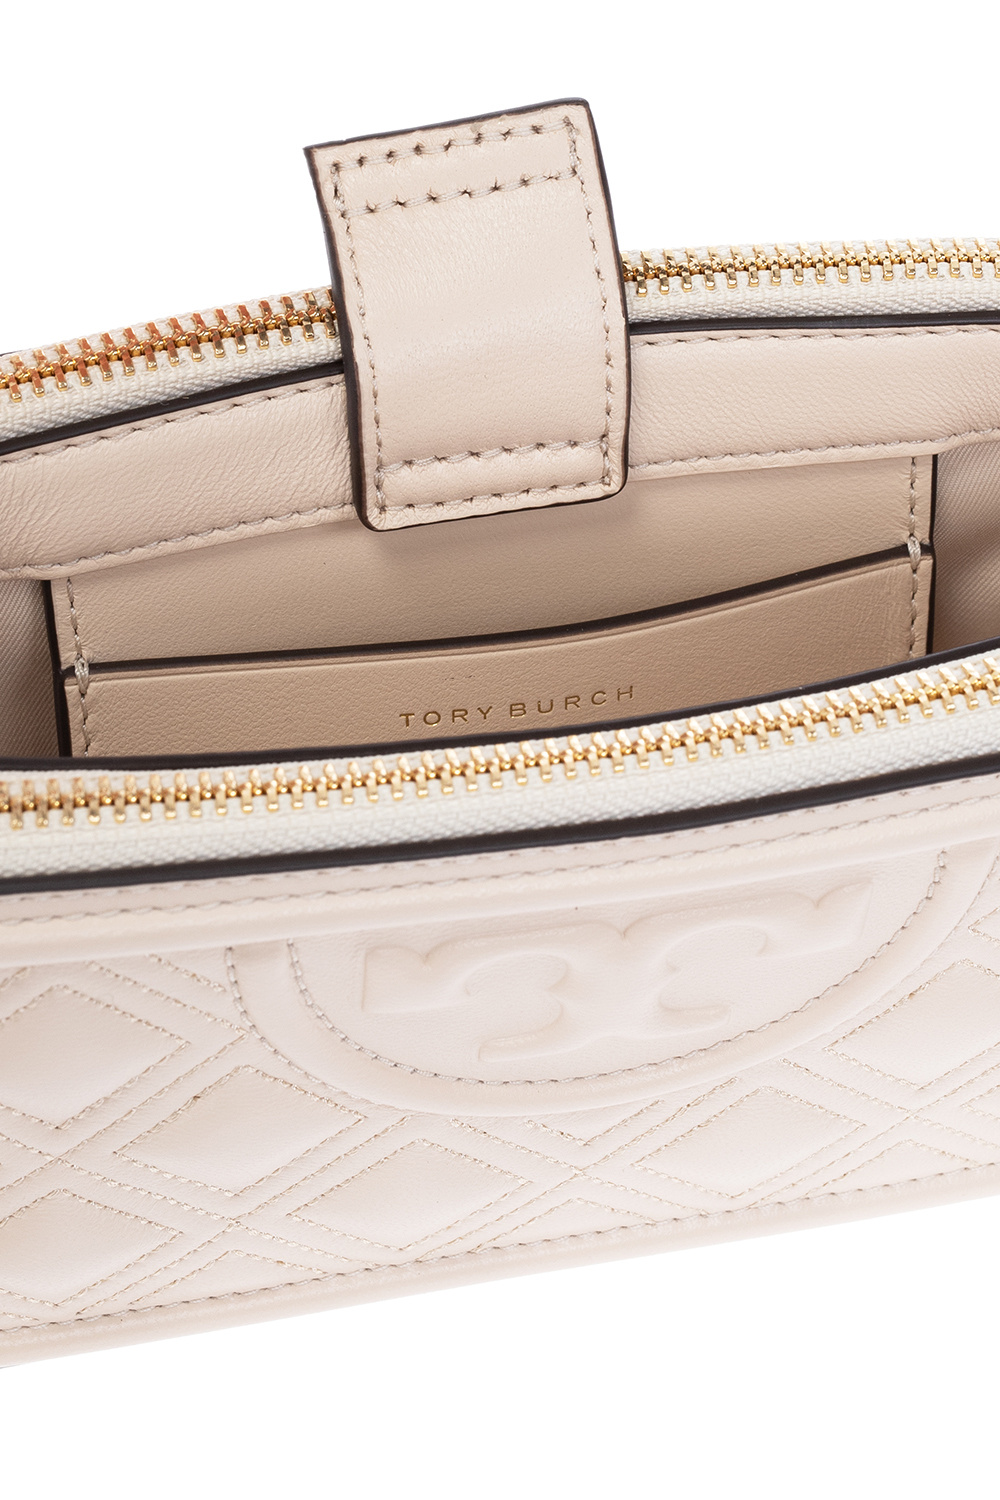 IetpShops GB - Moschino charm-detail tote bag - 'Fleming Mini' shoulder bag  Tory Burch